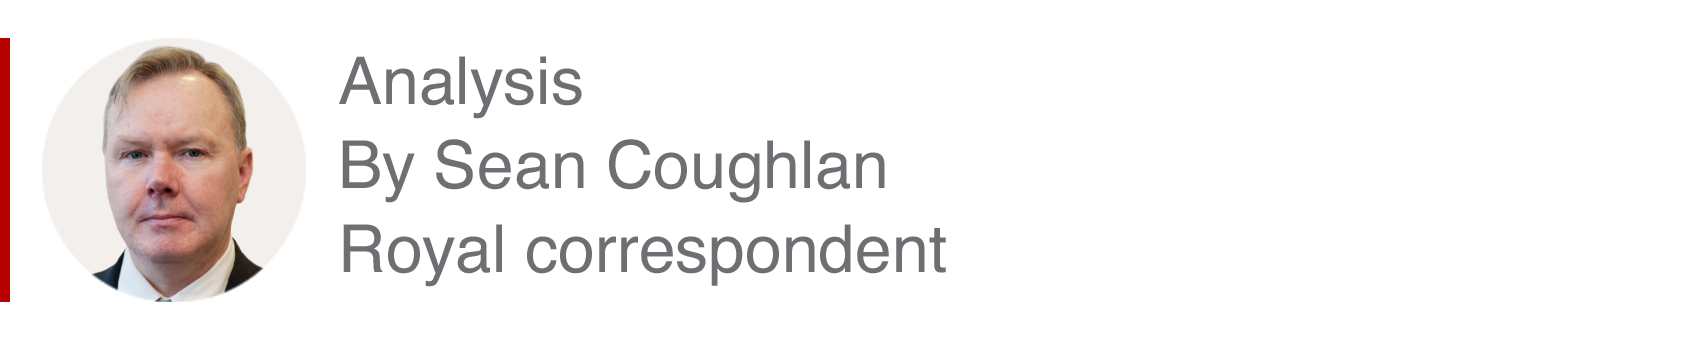 Analysis box by Sean Coughlan, royal correspondent